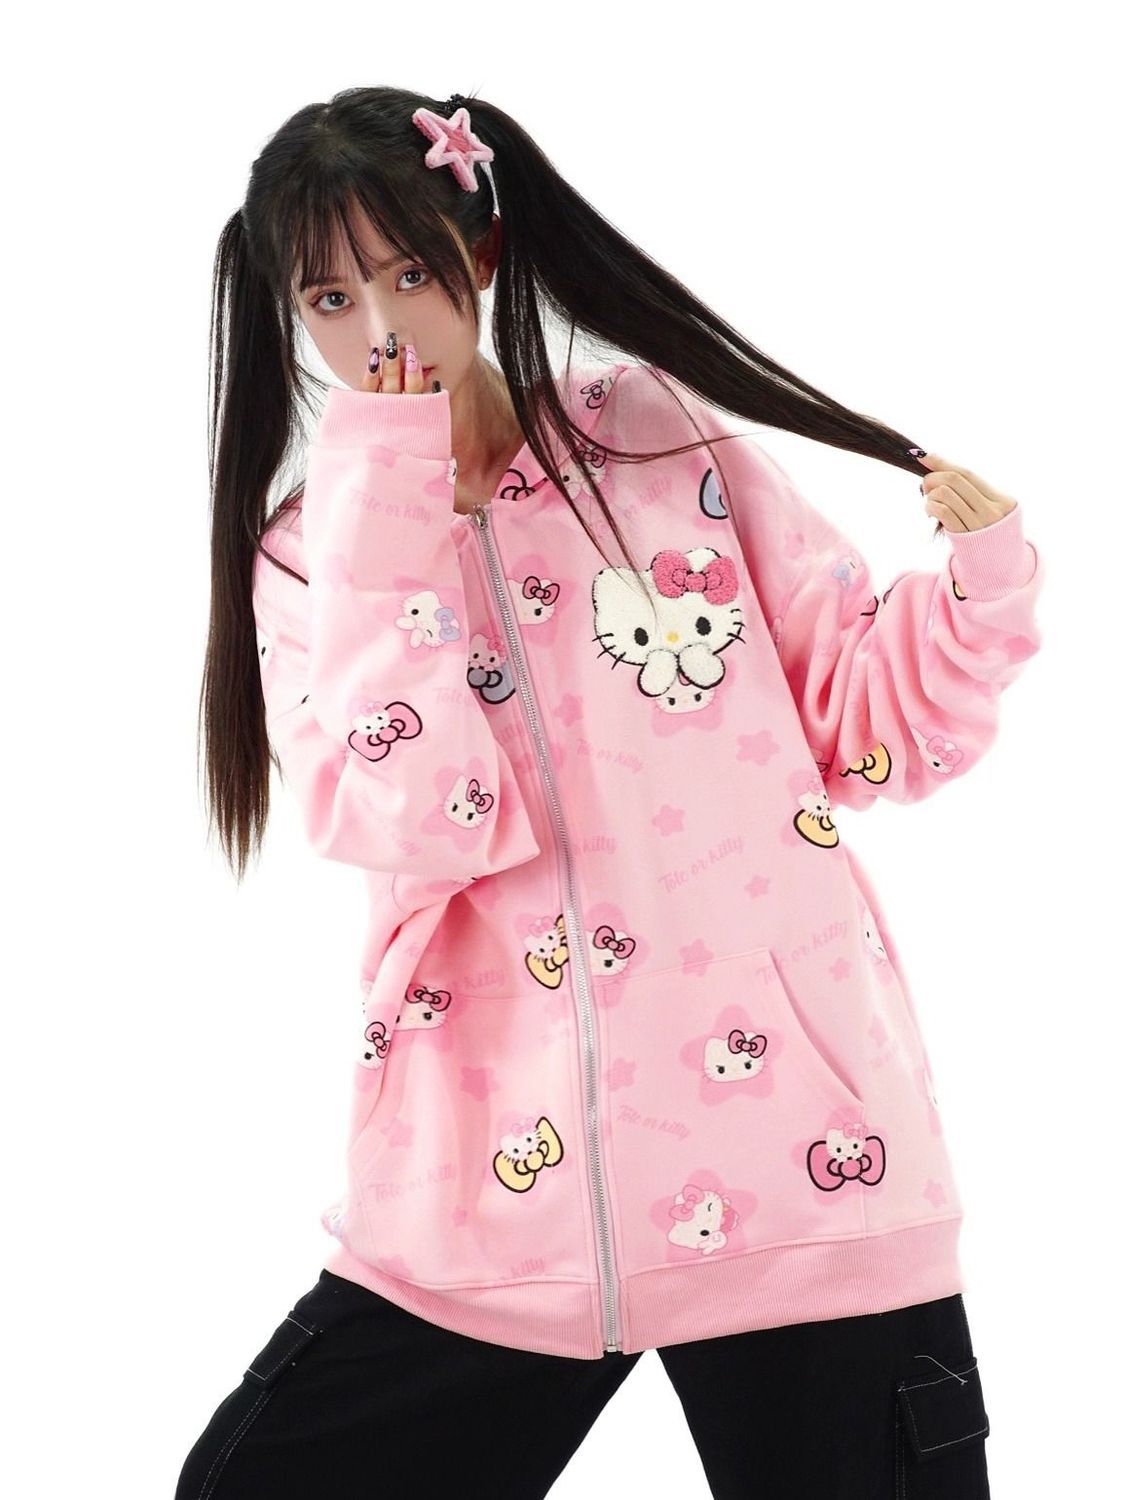 Chinese trendy American cartoon sweet girl style full printed Hello Kitty cardigan zipper hooded sweatshirt for men and women heavy cotton jacket